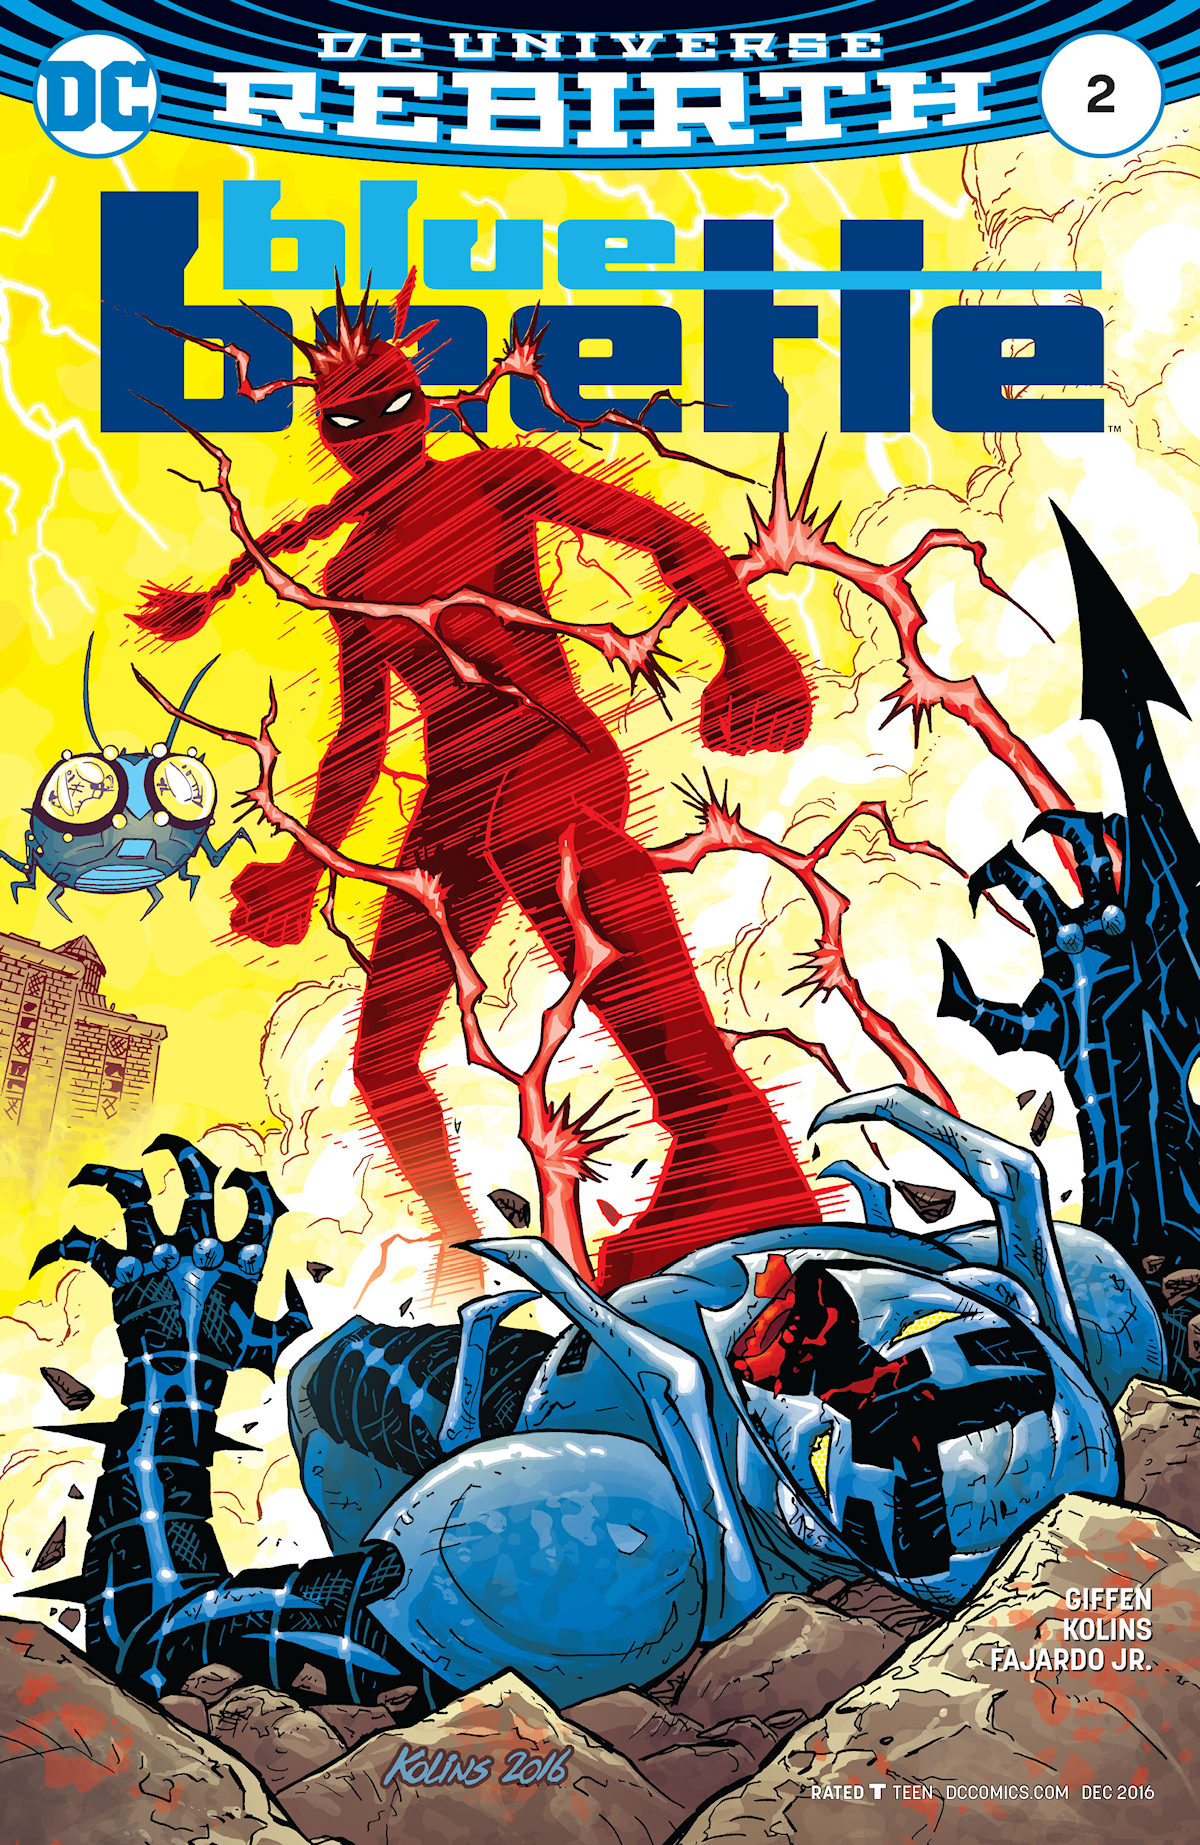 Blue Beetle Vol. 5 2 (Cover A)